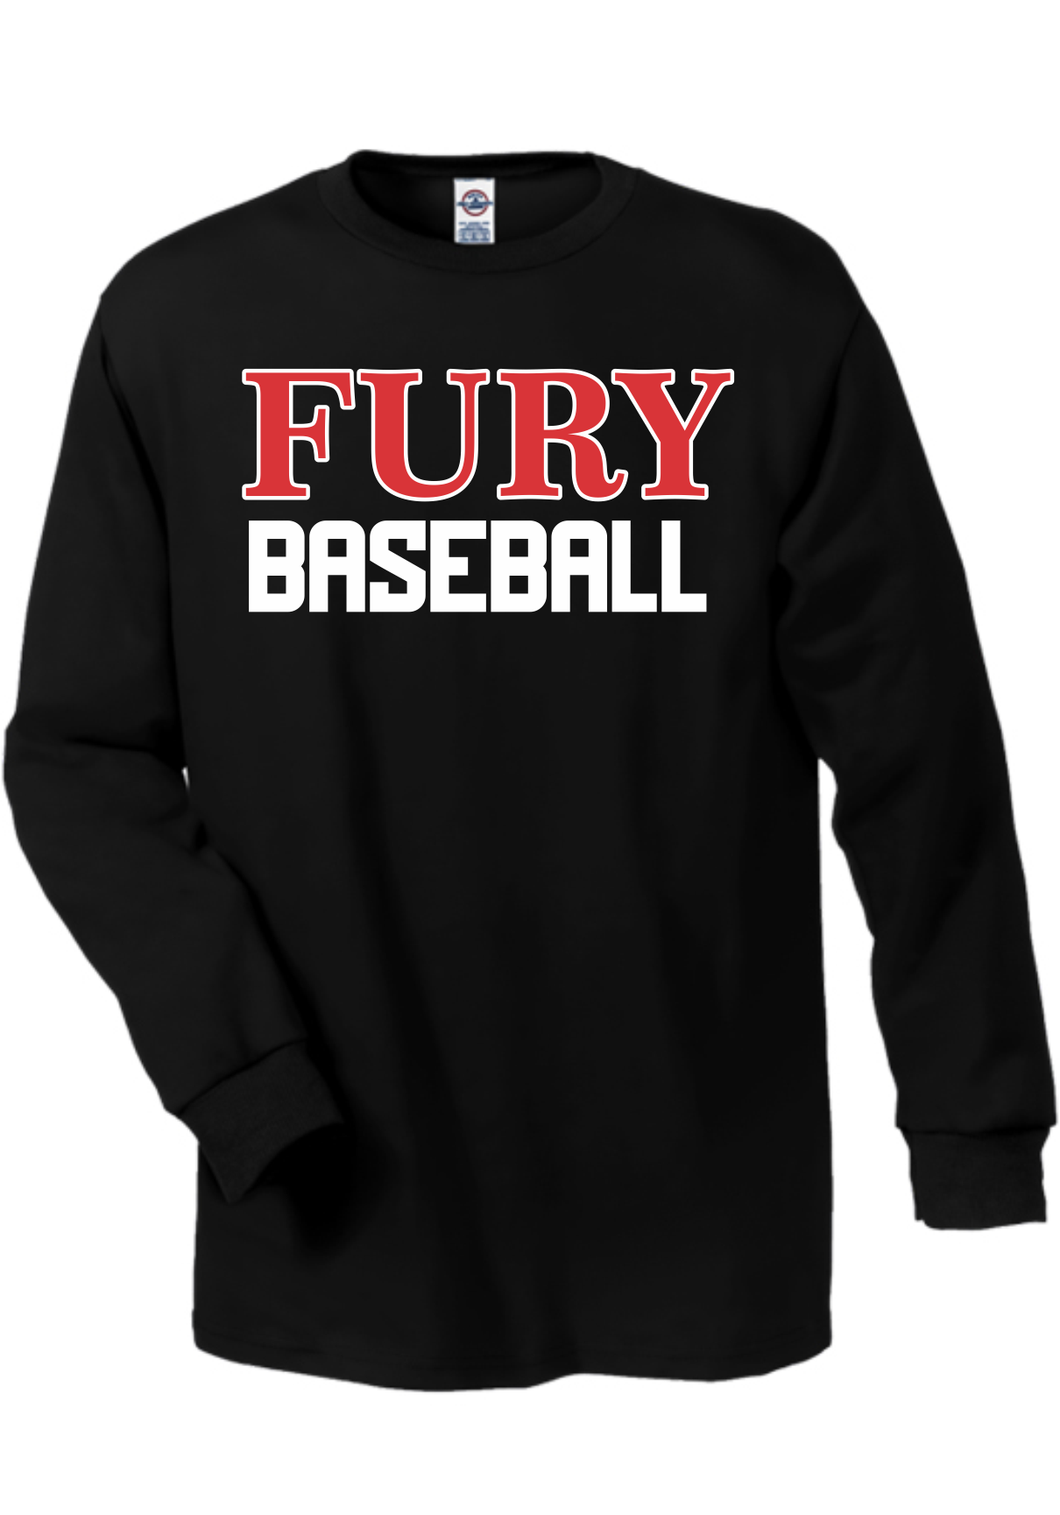 Fury Baseball - Premium Long Sleeve Tee Shirt